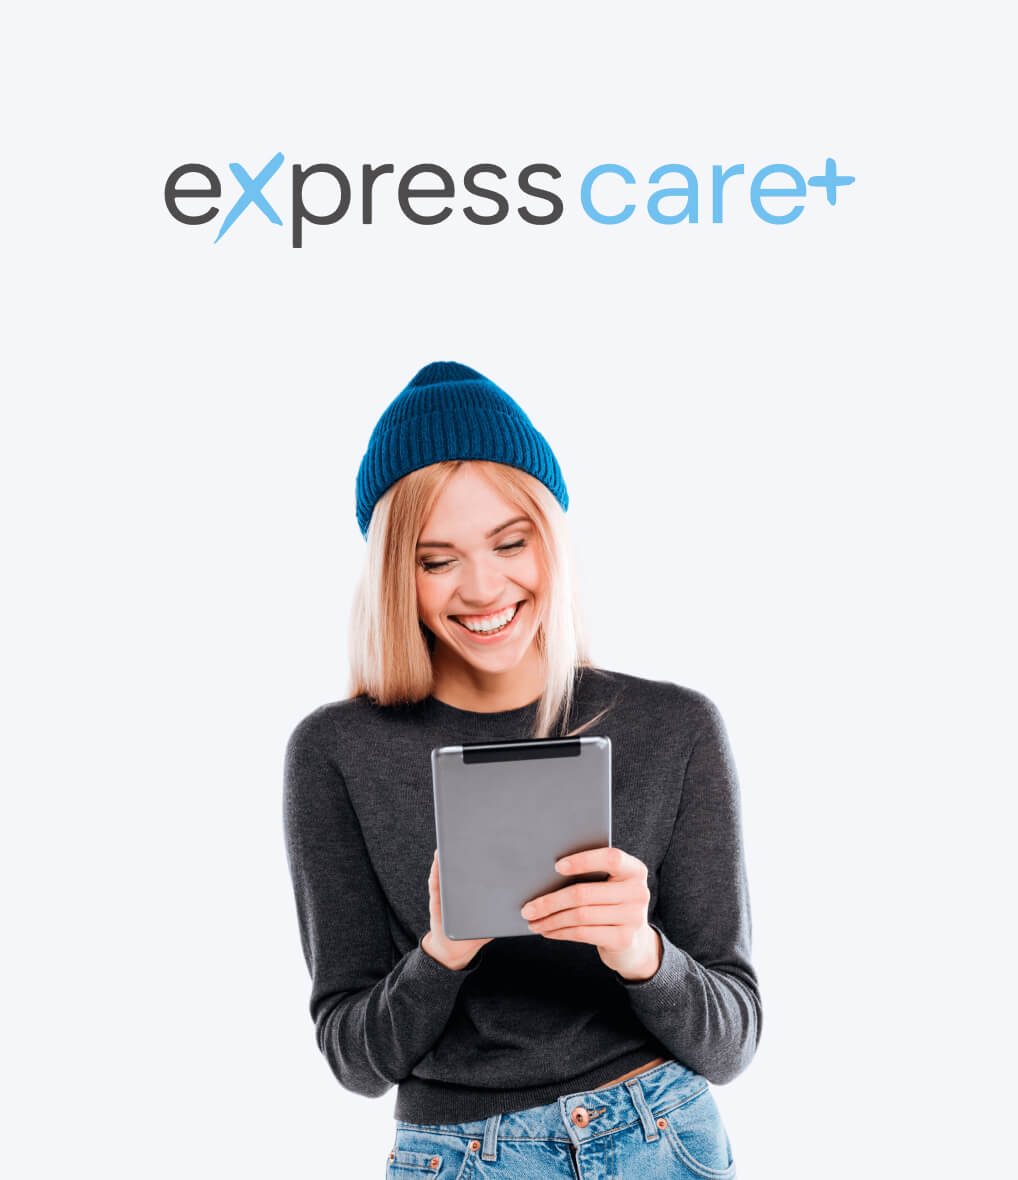 expresscare+ woman using ipad